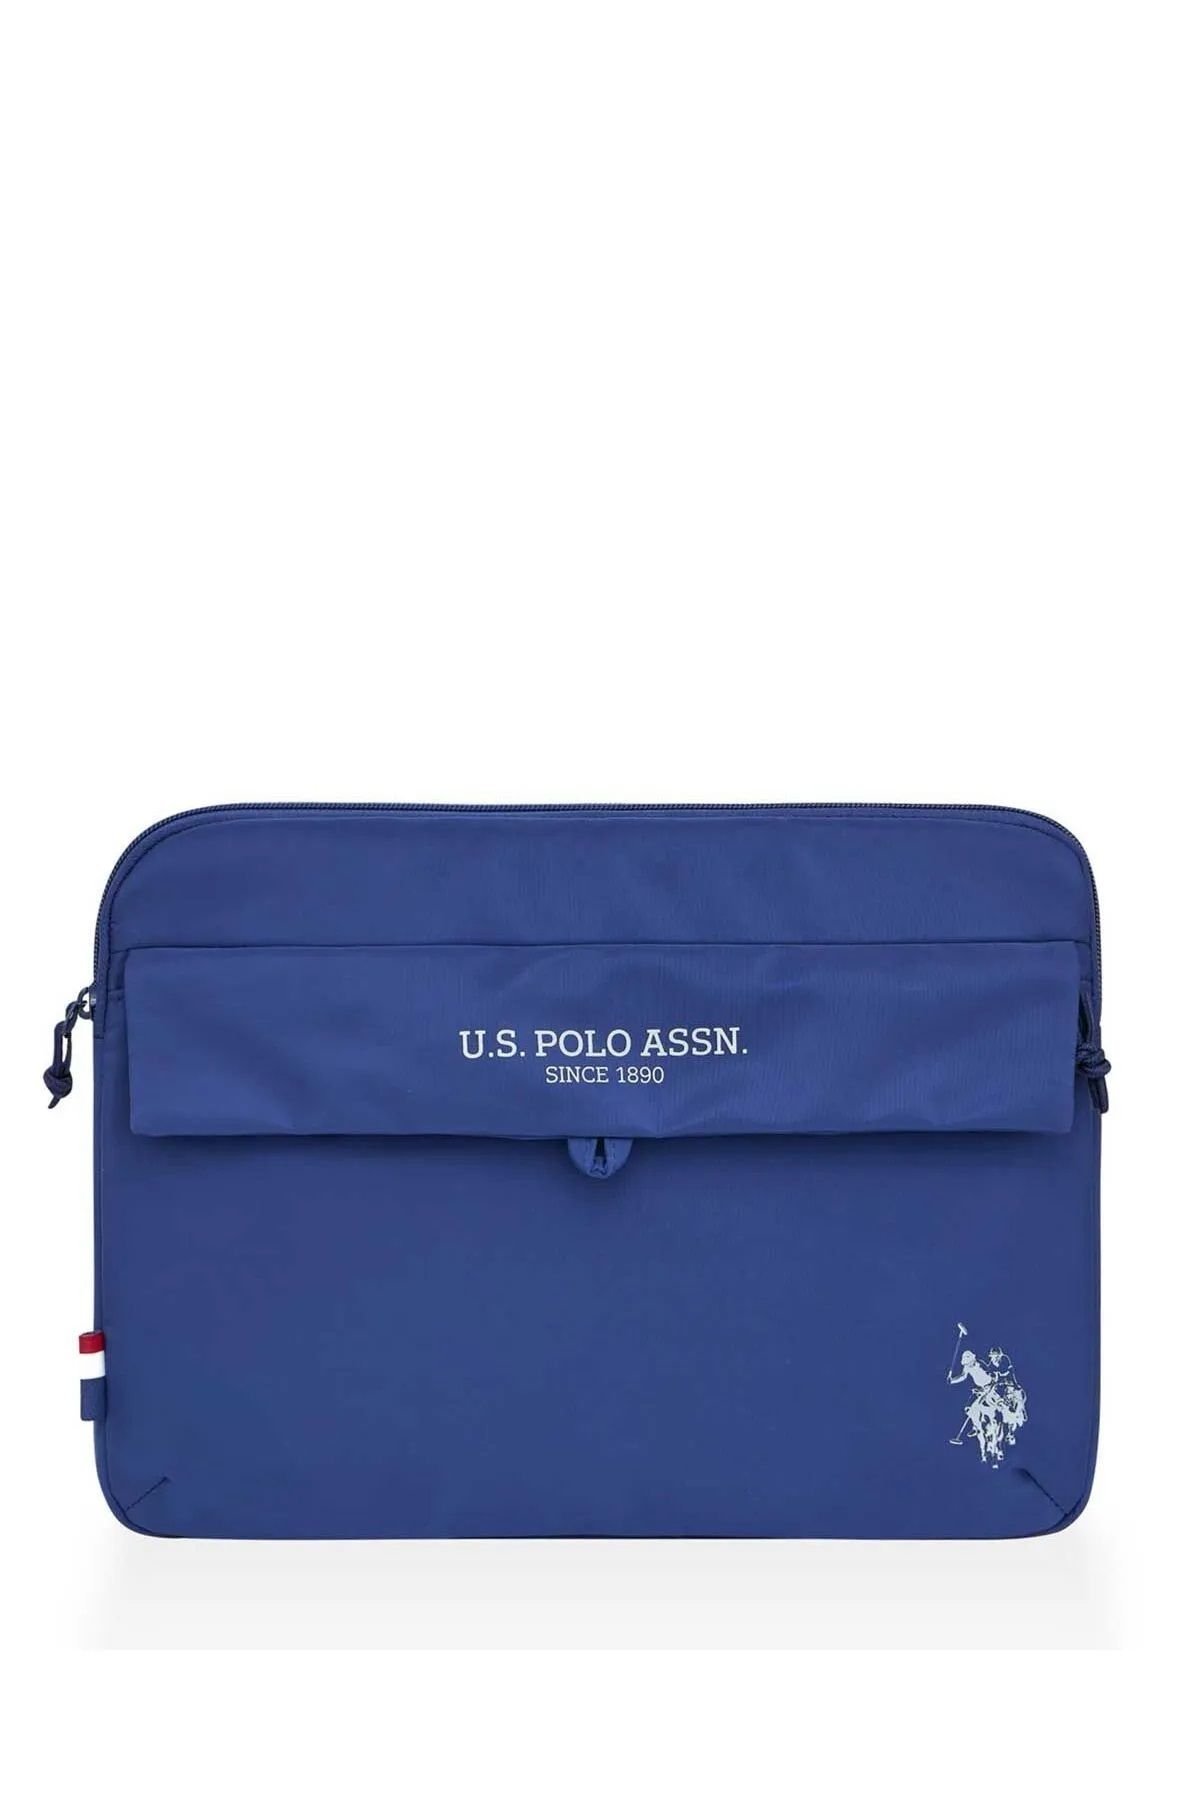 U.S. Polo Assn. U.S. Polo Assn. 23684 Unisex Laptop Bölmeli Evrak Çantası LACİVERT